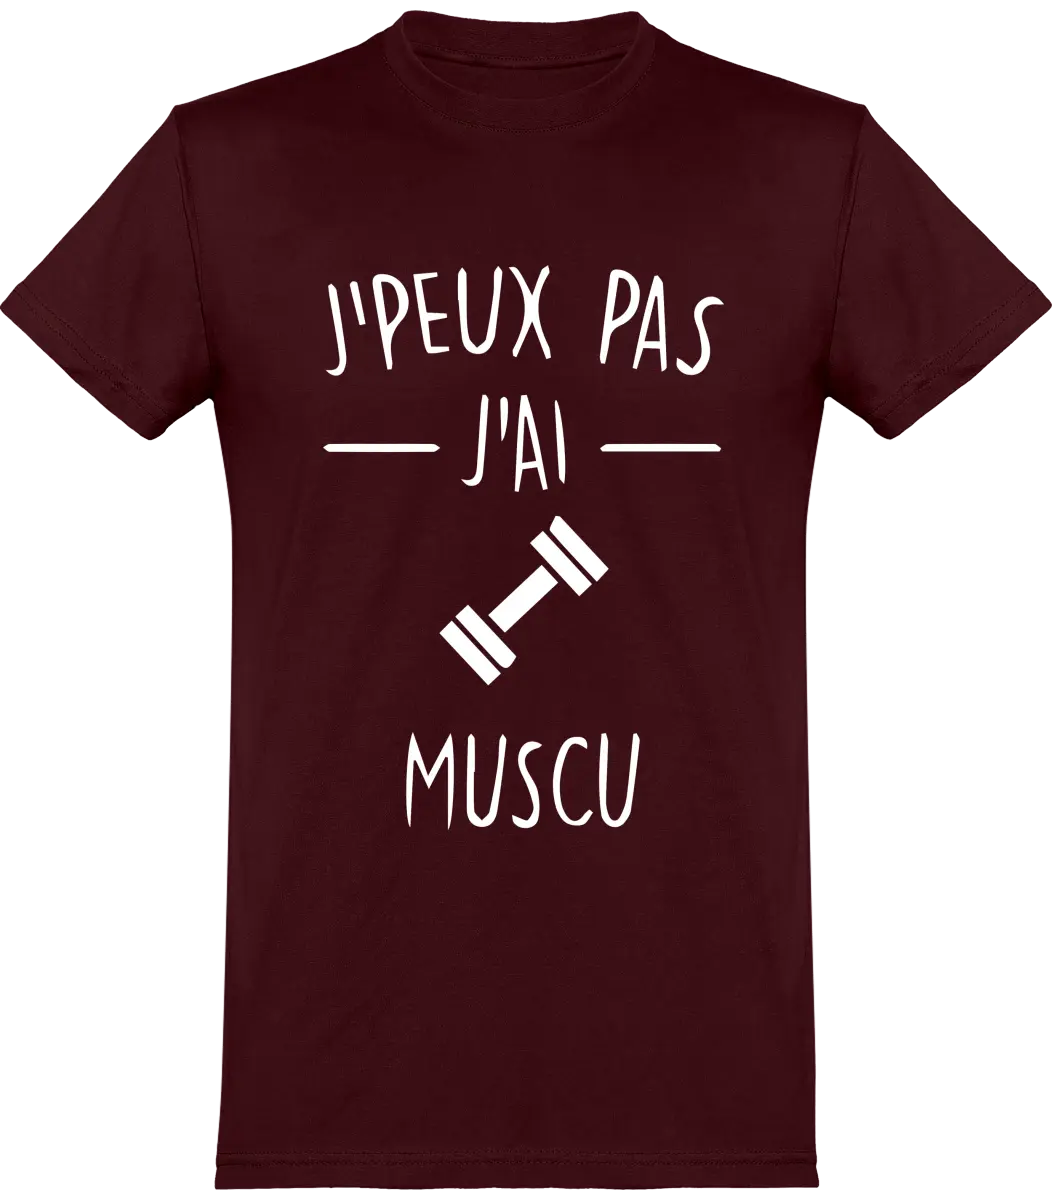 T-shirt Muscu "j'peux pas j'ai muscu" | Mixte - French Humour